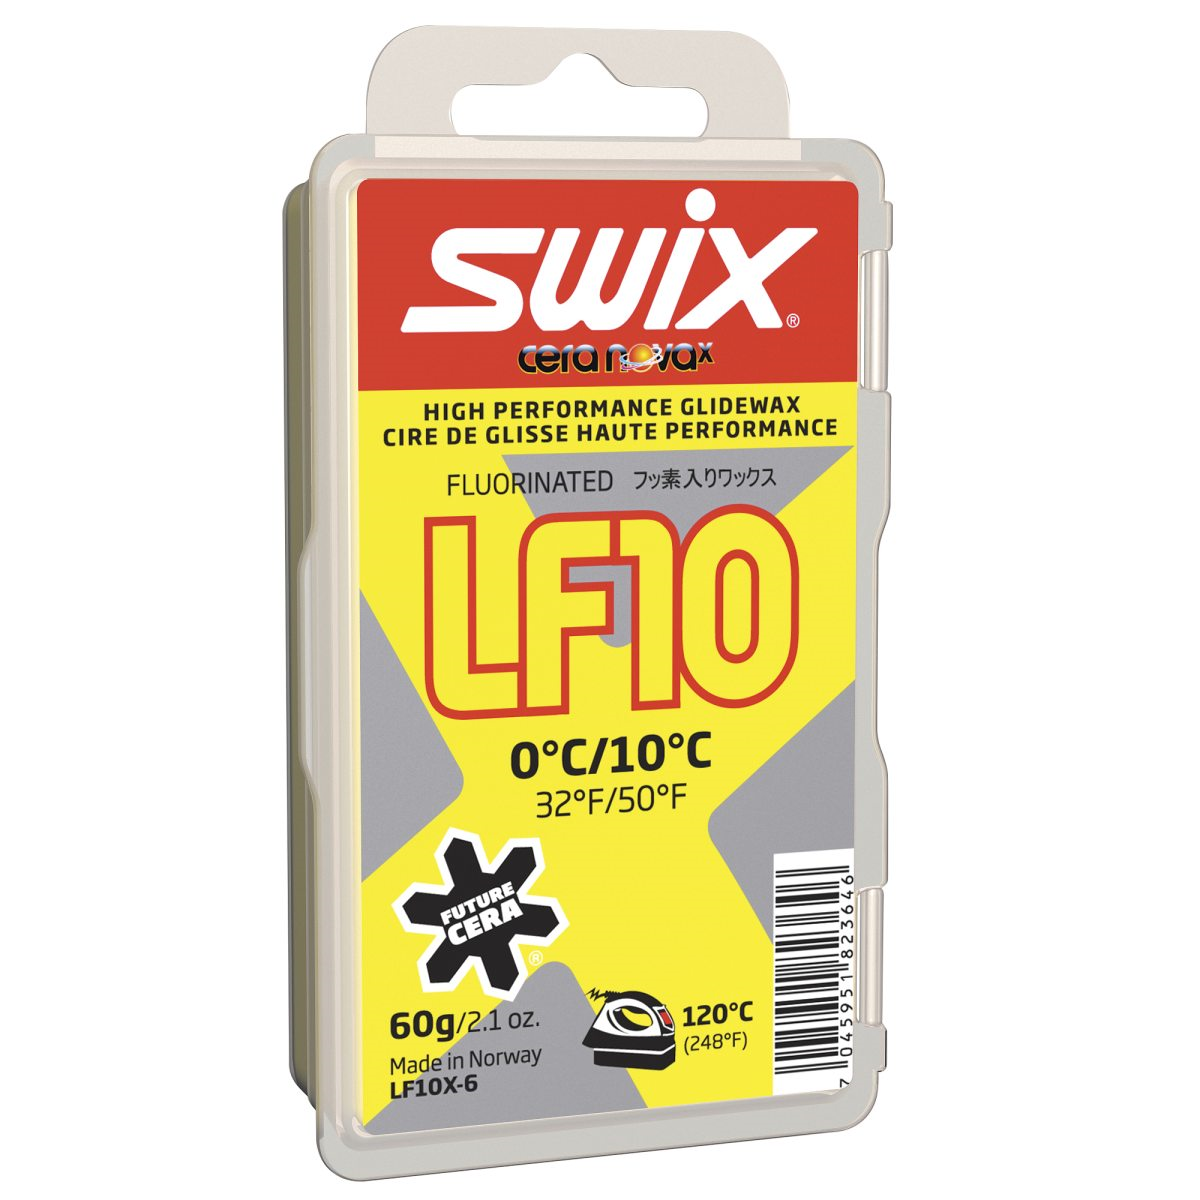 Swix LF10 Glider 0C/+10C